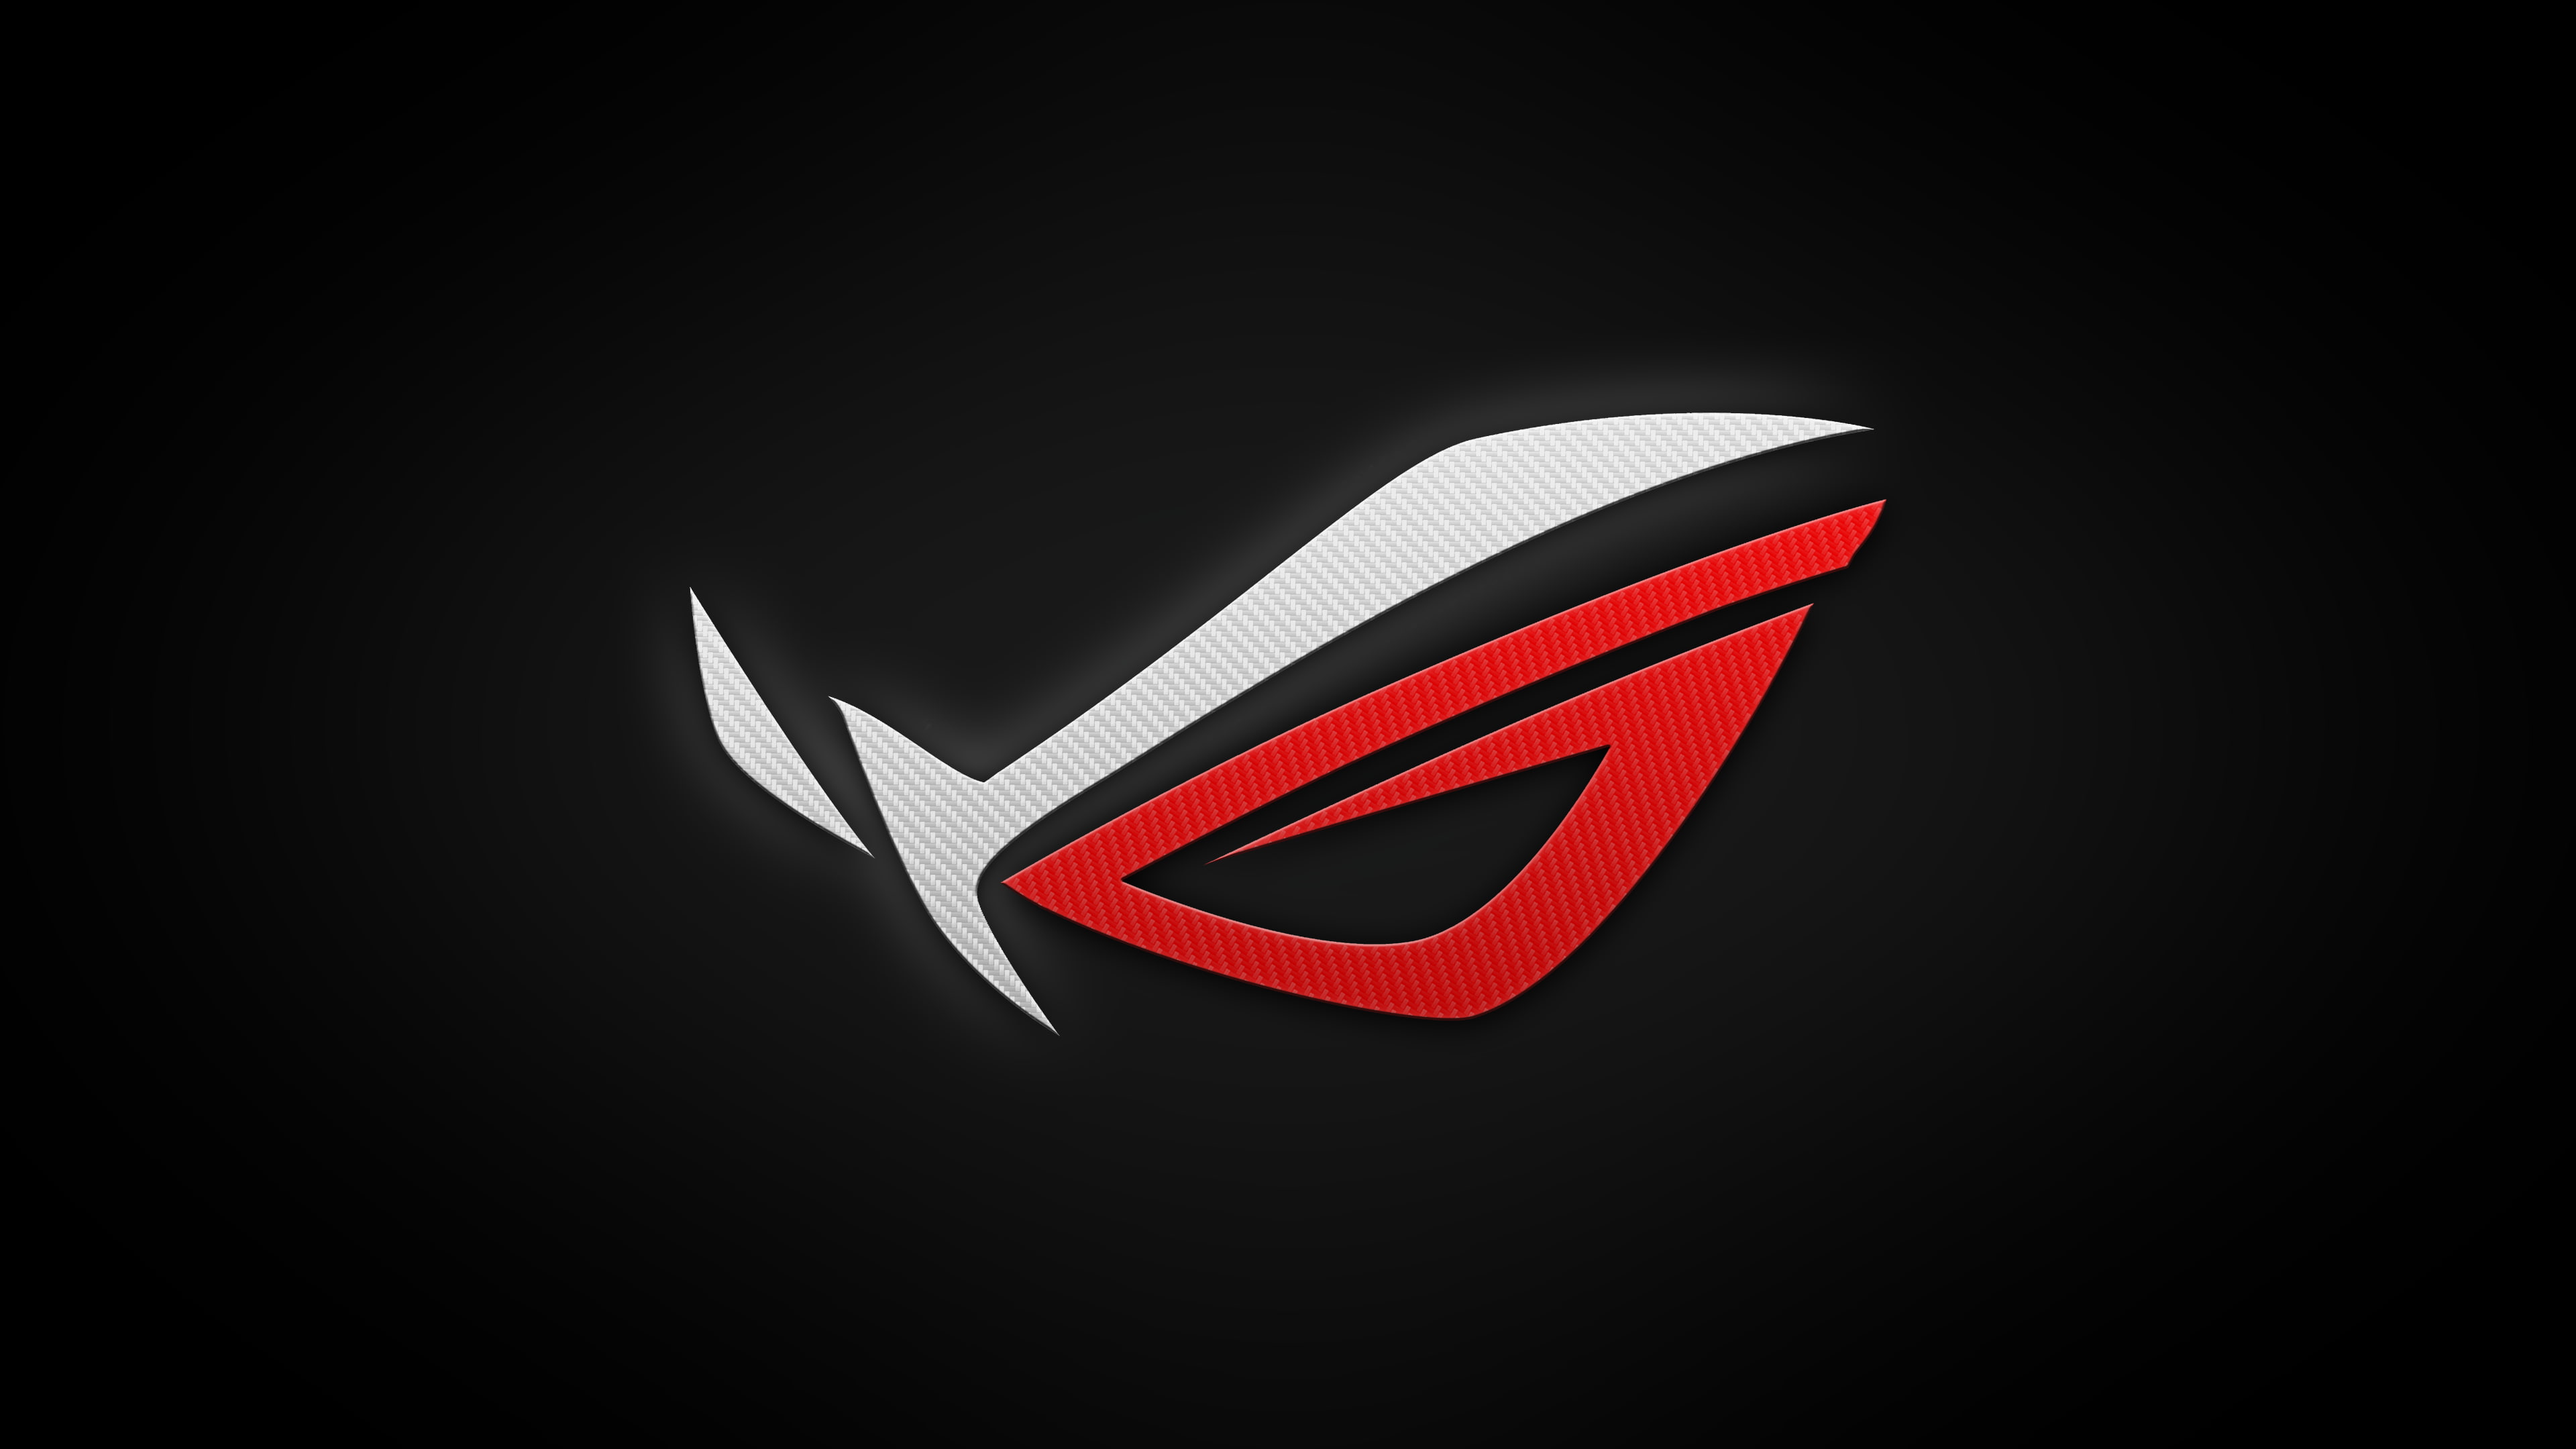 Asus ROG logo, Republic of Gamers, black background, illuminated